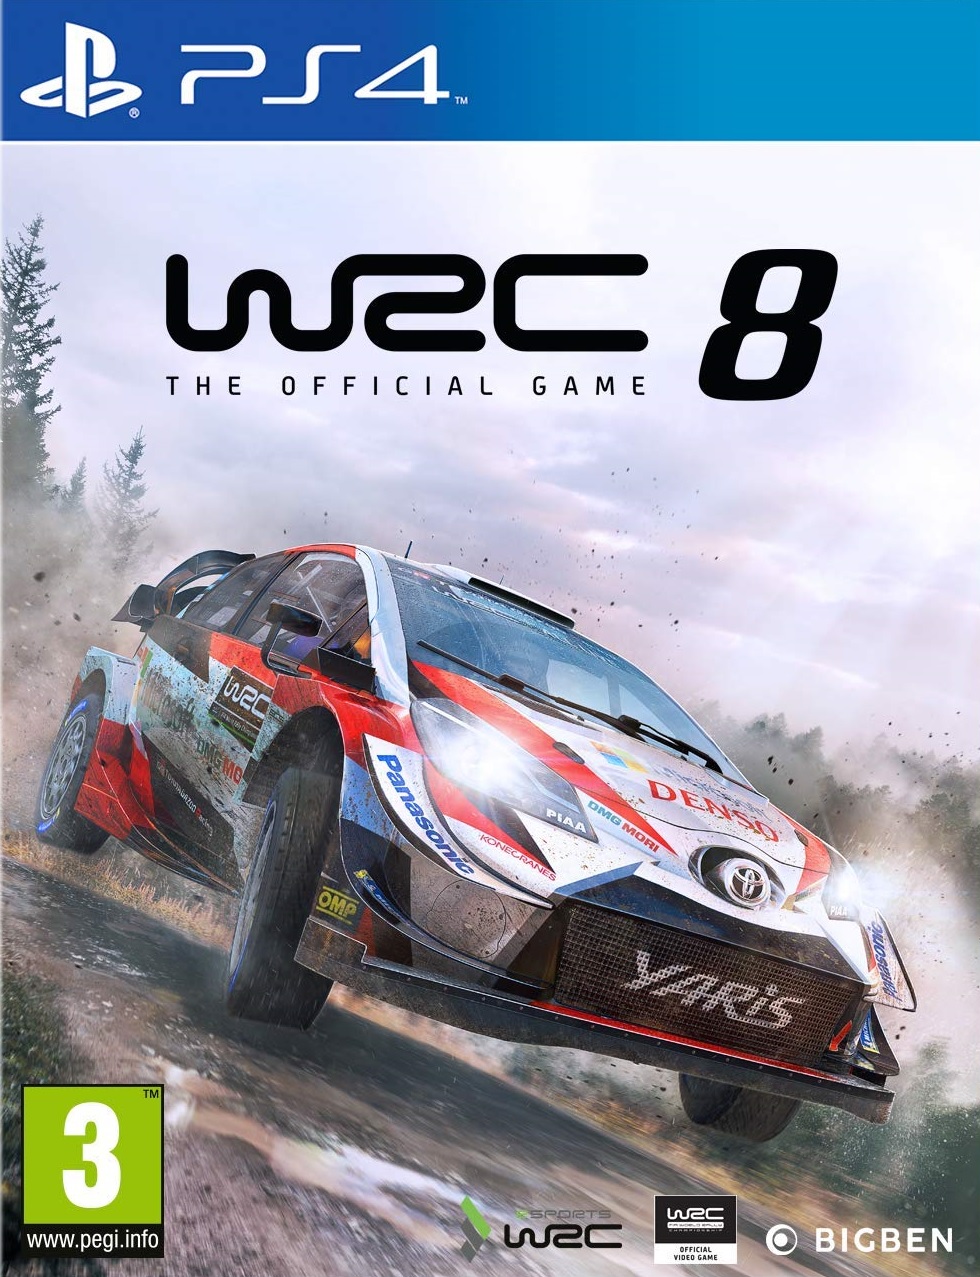 World Rally Championship 8 (WRC 8) 